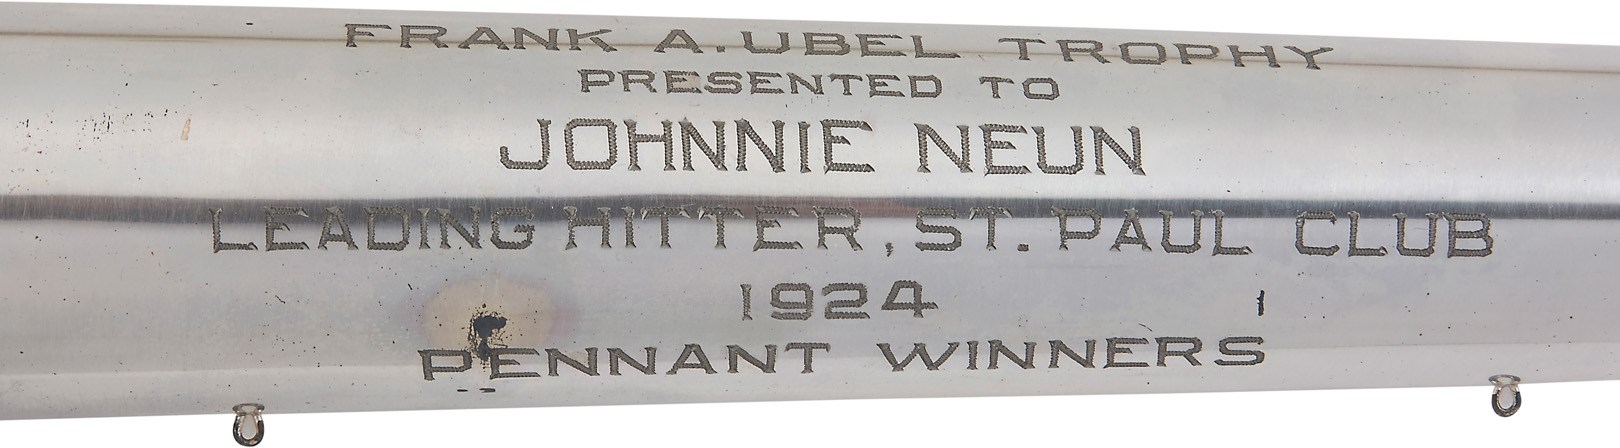 - 1924 Johhnie Neun Batting Championship "Silver" Bat and Ball